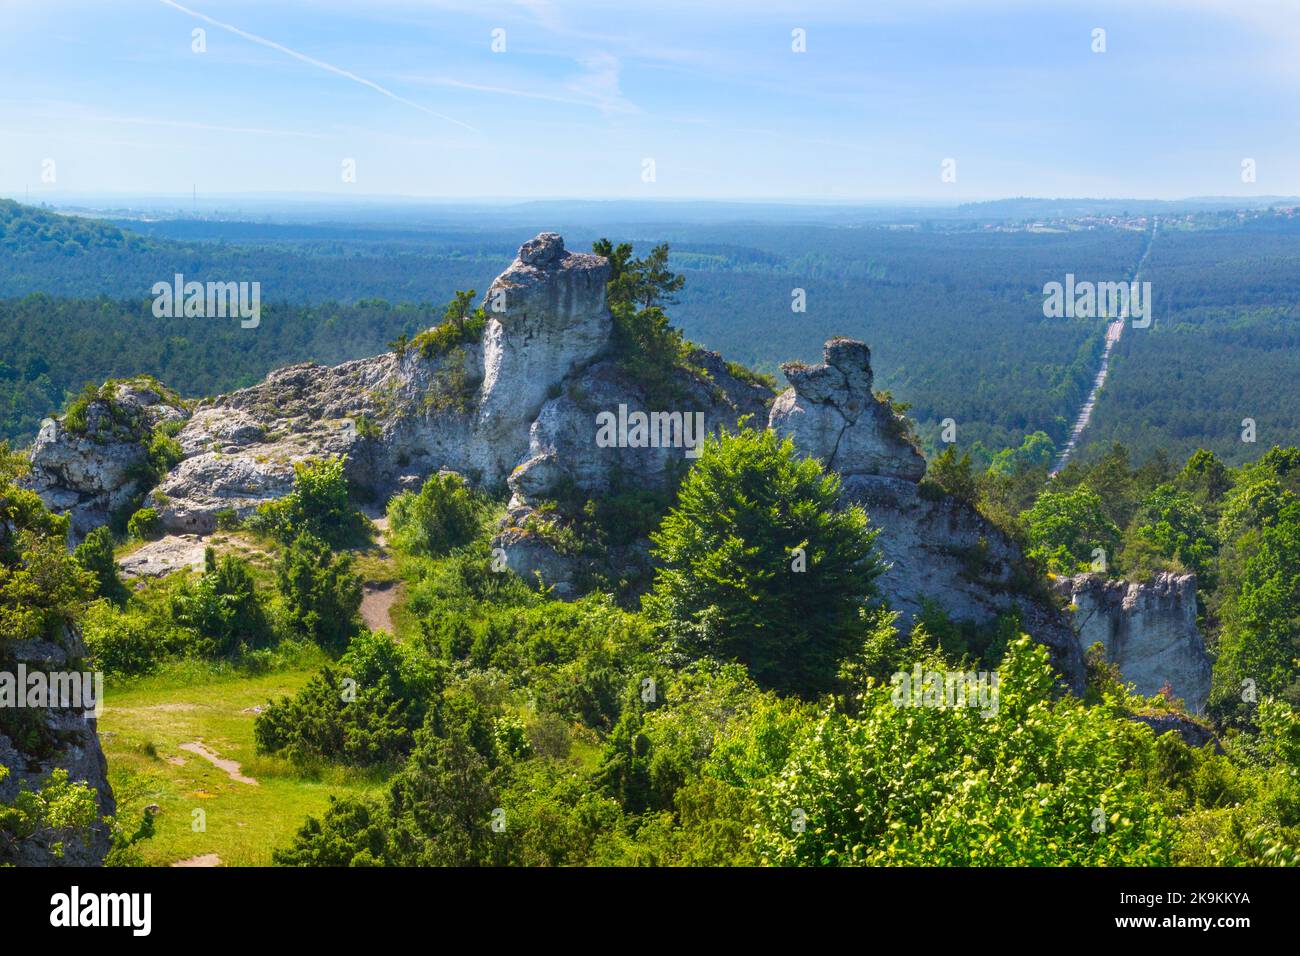 Landscape with limestone rocks from peak of Gora Zborow in Podlesice, Poland Stock Photo